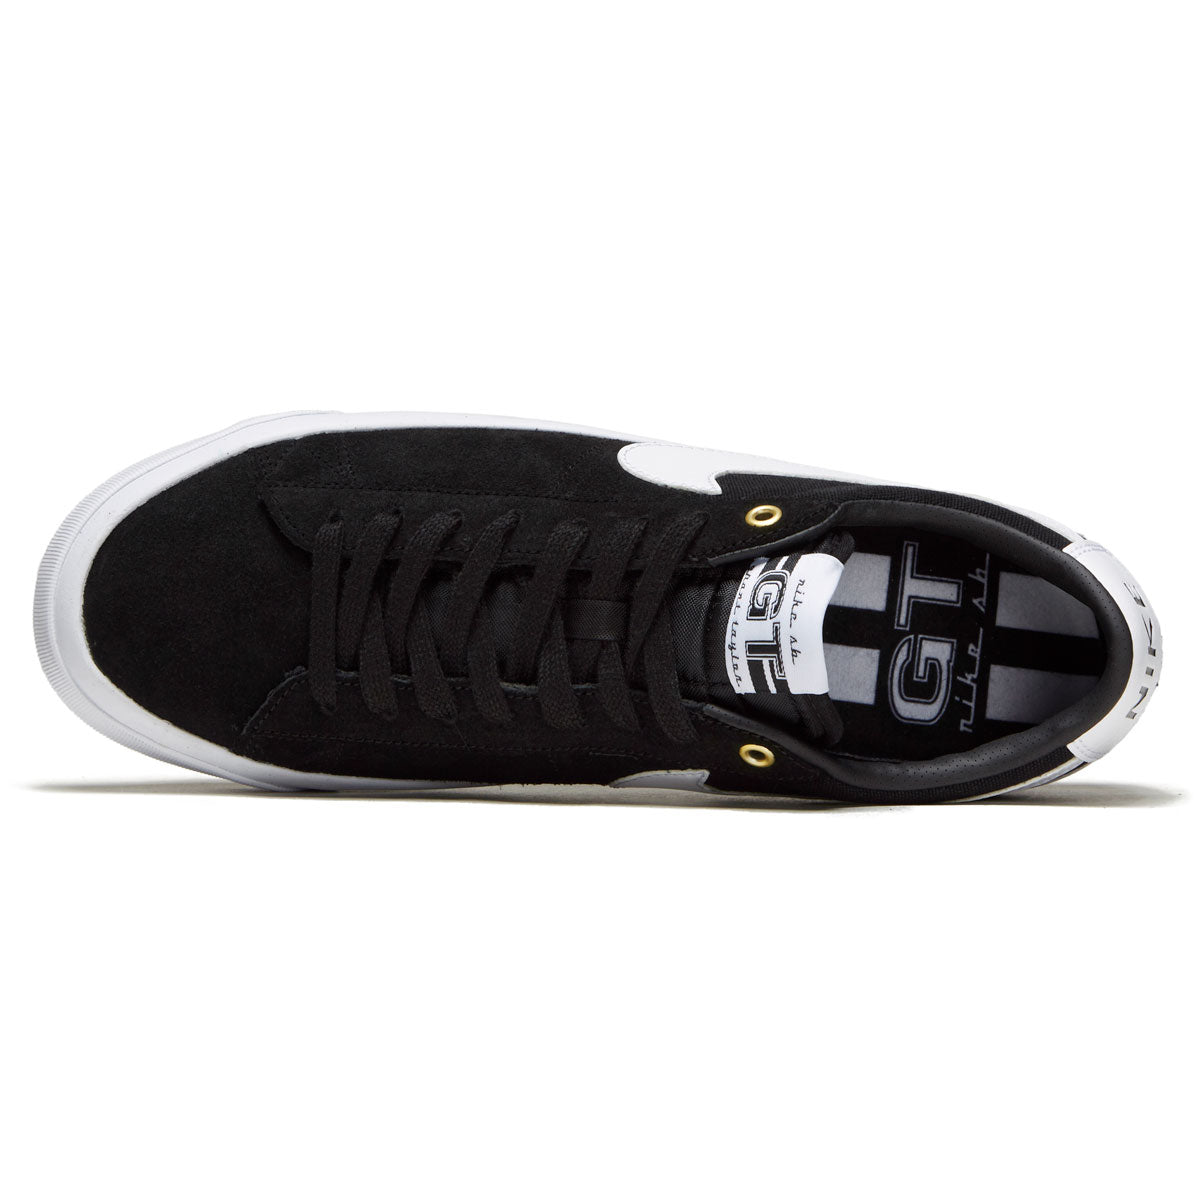 Nike SB Zoom Blazer Low Pro GT Shoes - Black/White/Black/Gum Light Brown image 3